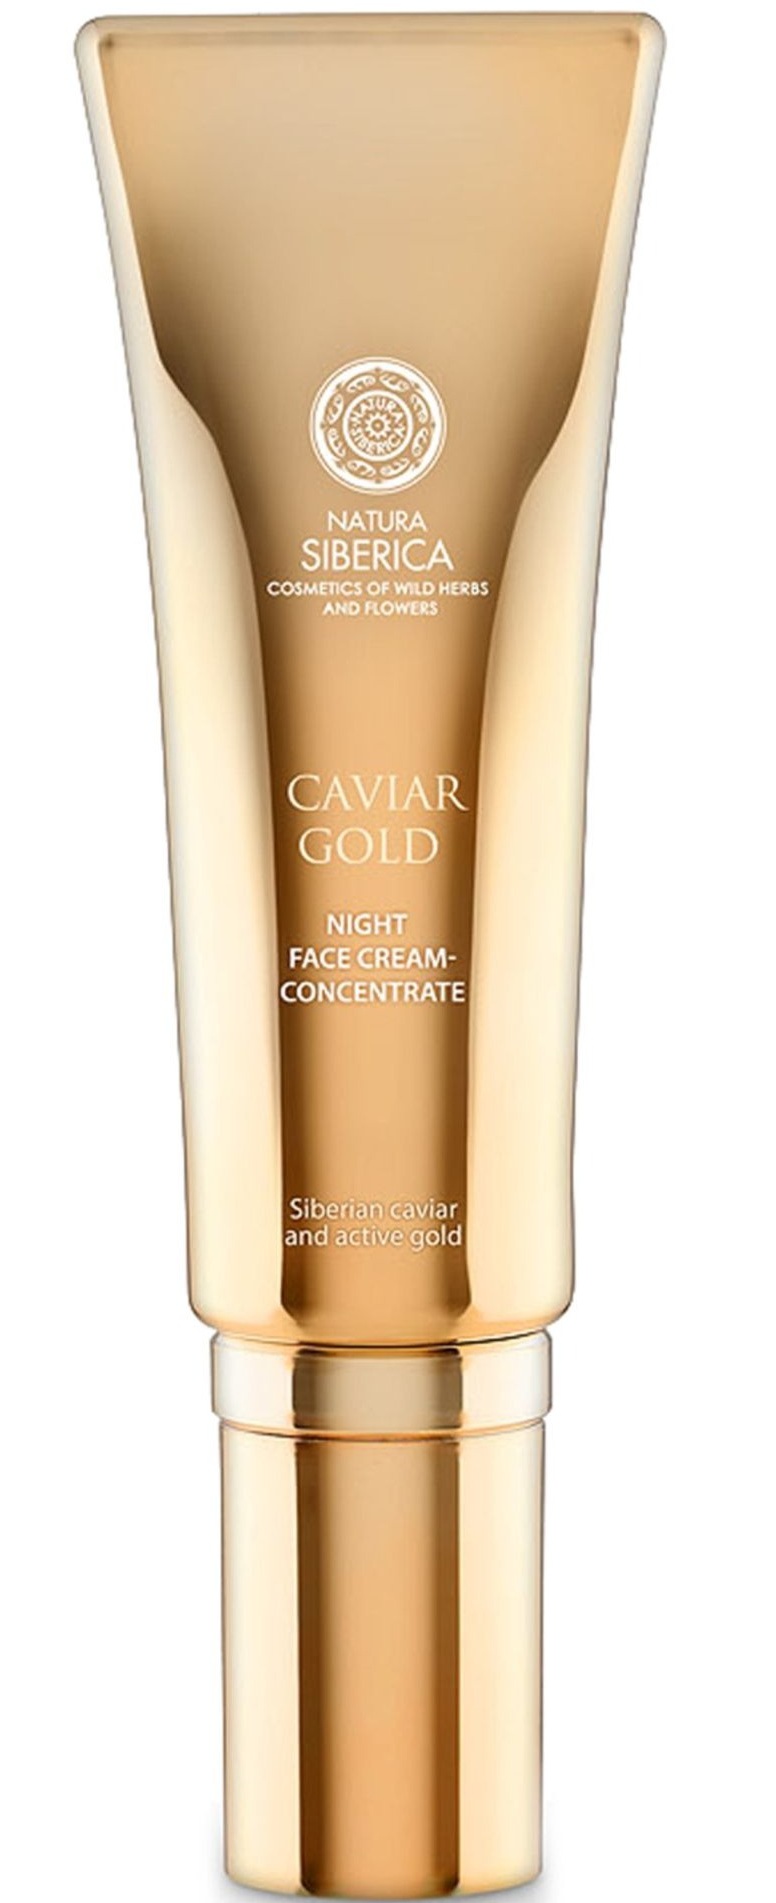 Natura Siberica Caviar Gold Night Face Cream-Concentrate